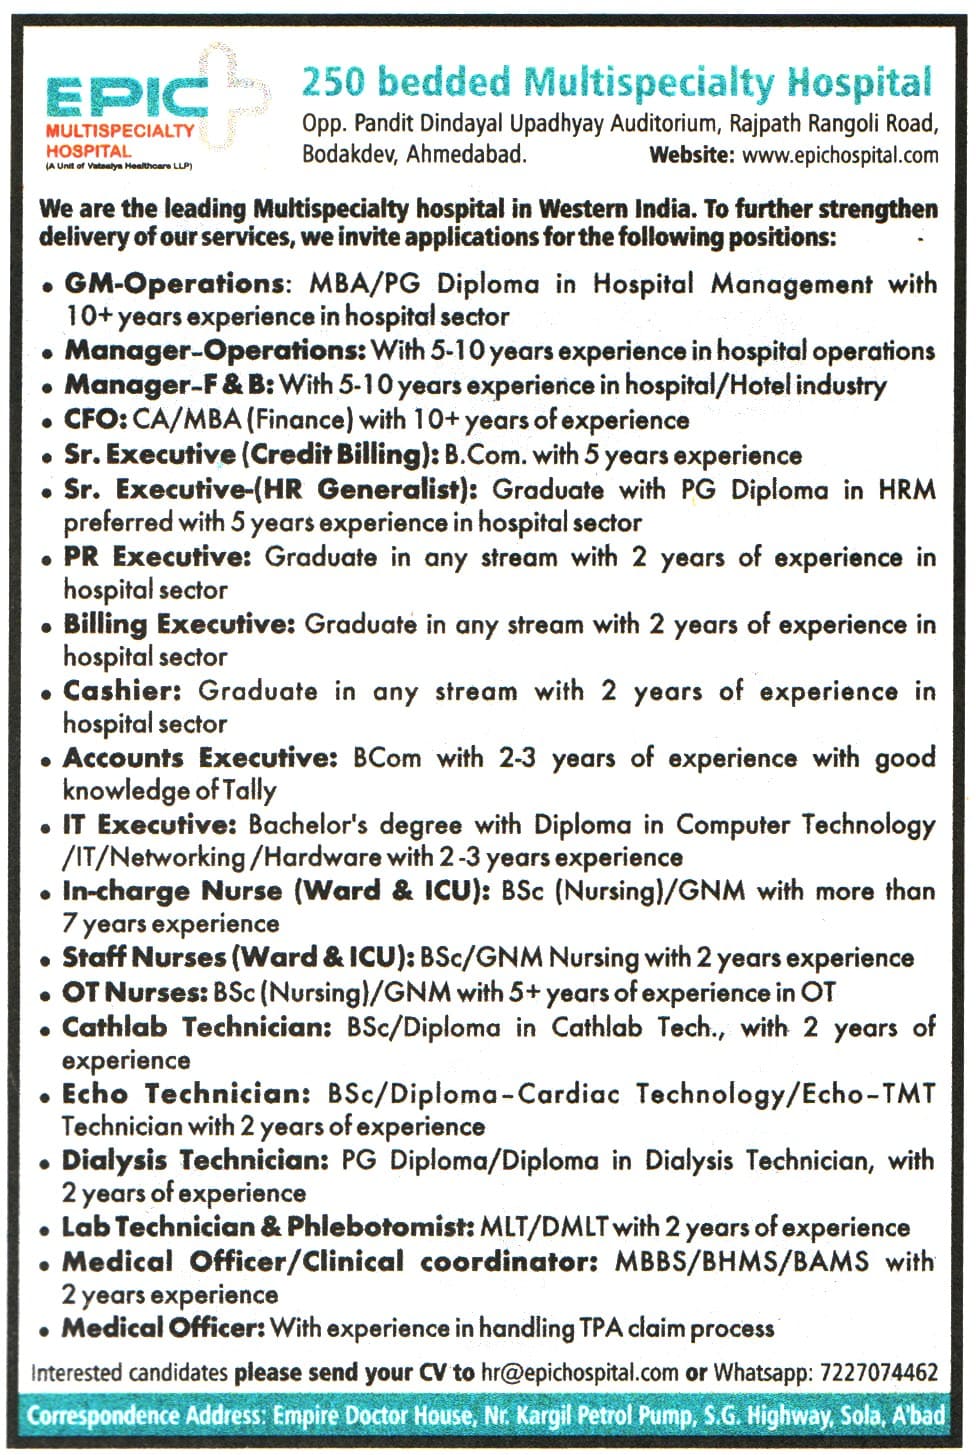 EPIC Multispecialty Hospital Ahmedabad Recruitment